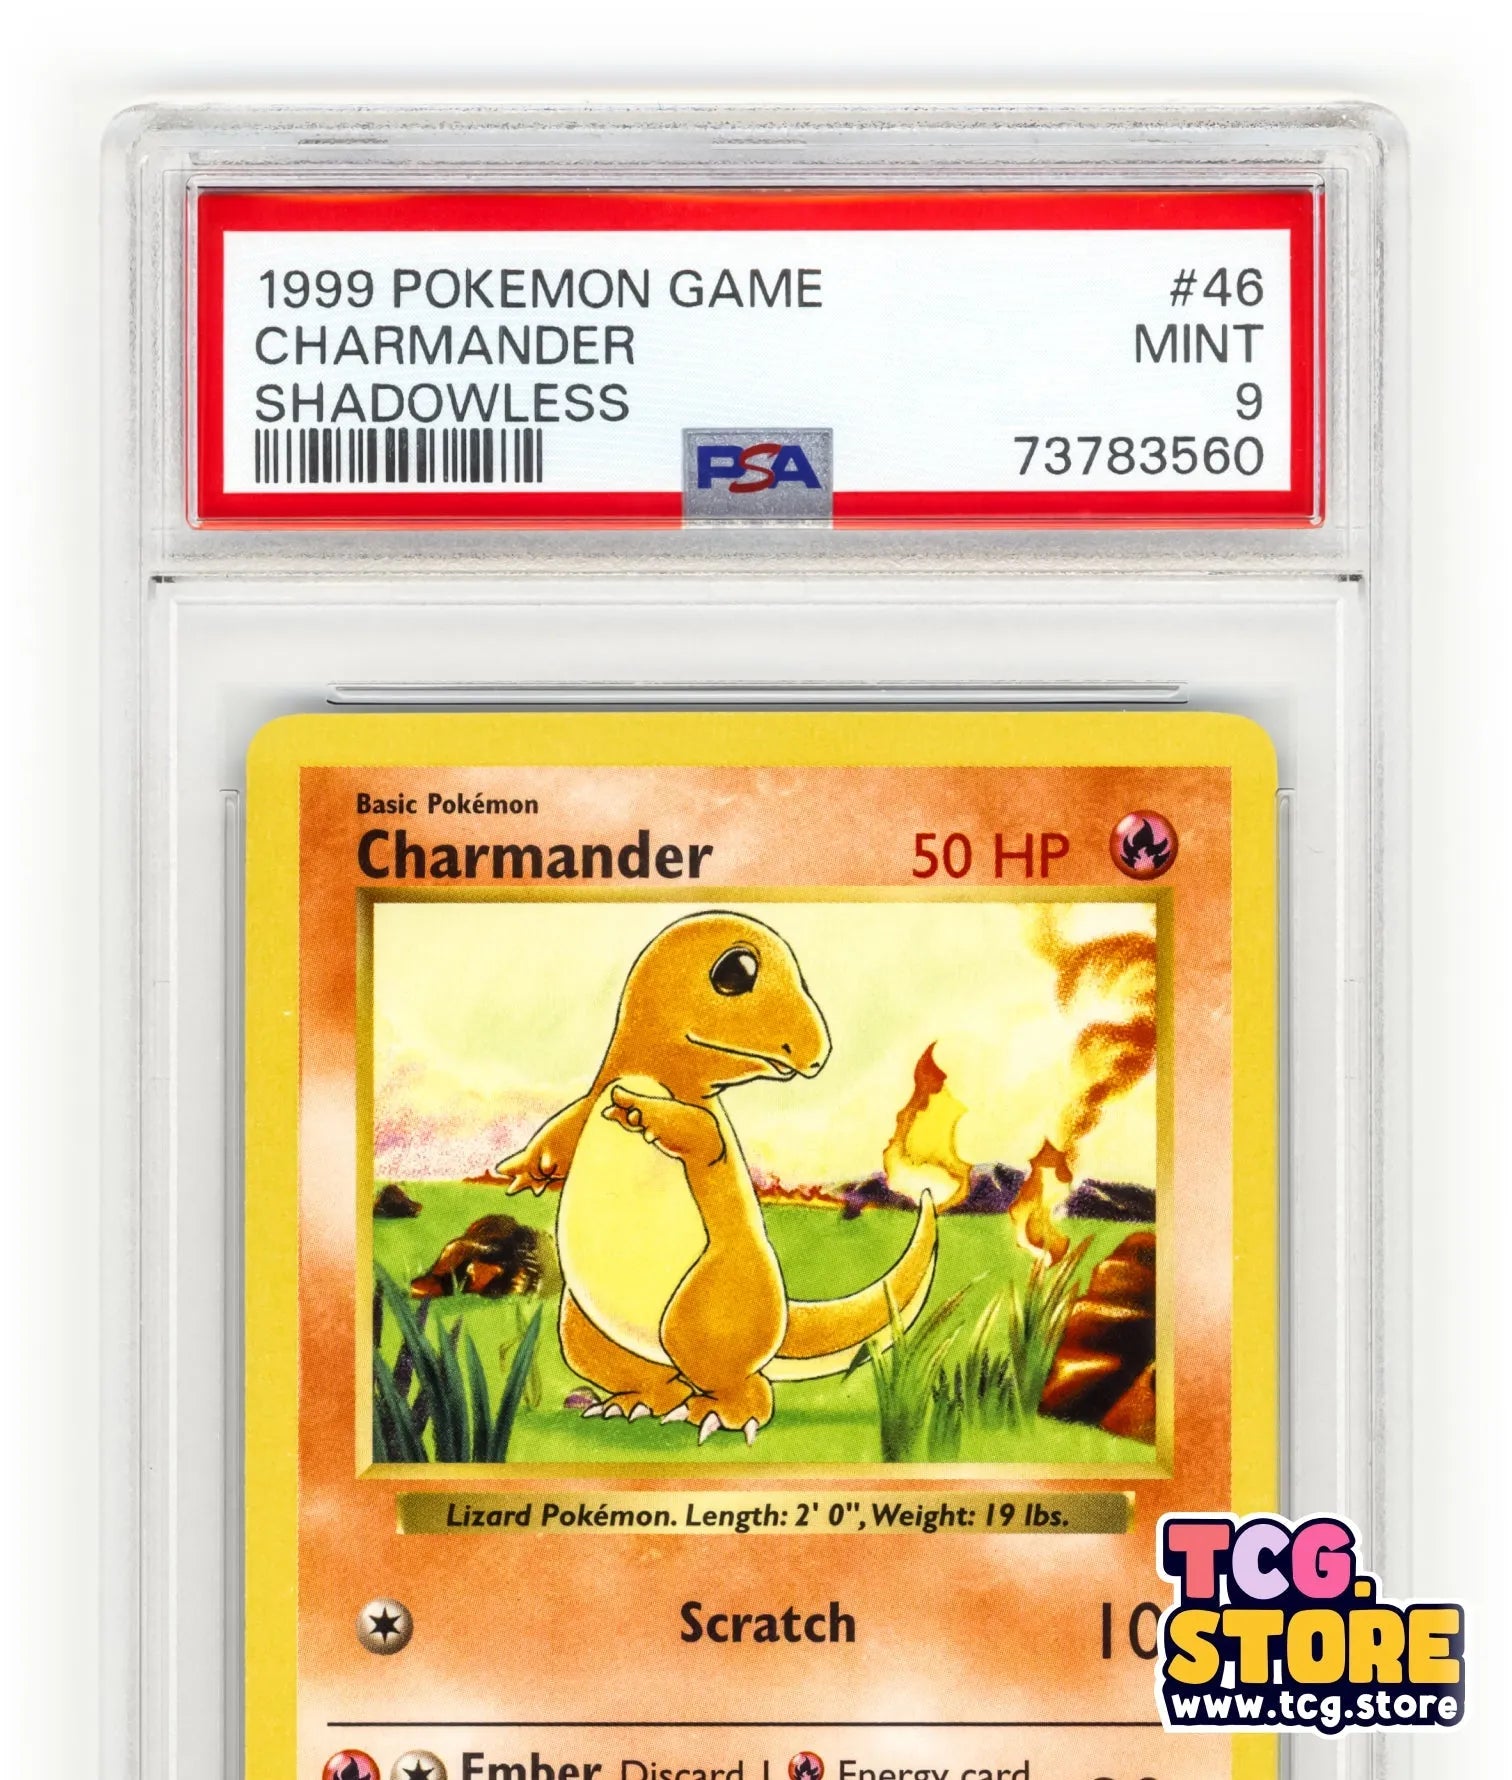 Pokémon Game 1999 Charmander - Shadowless - Base Set - PSA 9 MINT - TCG.Store